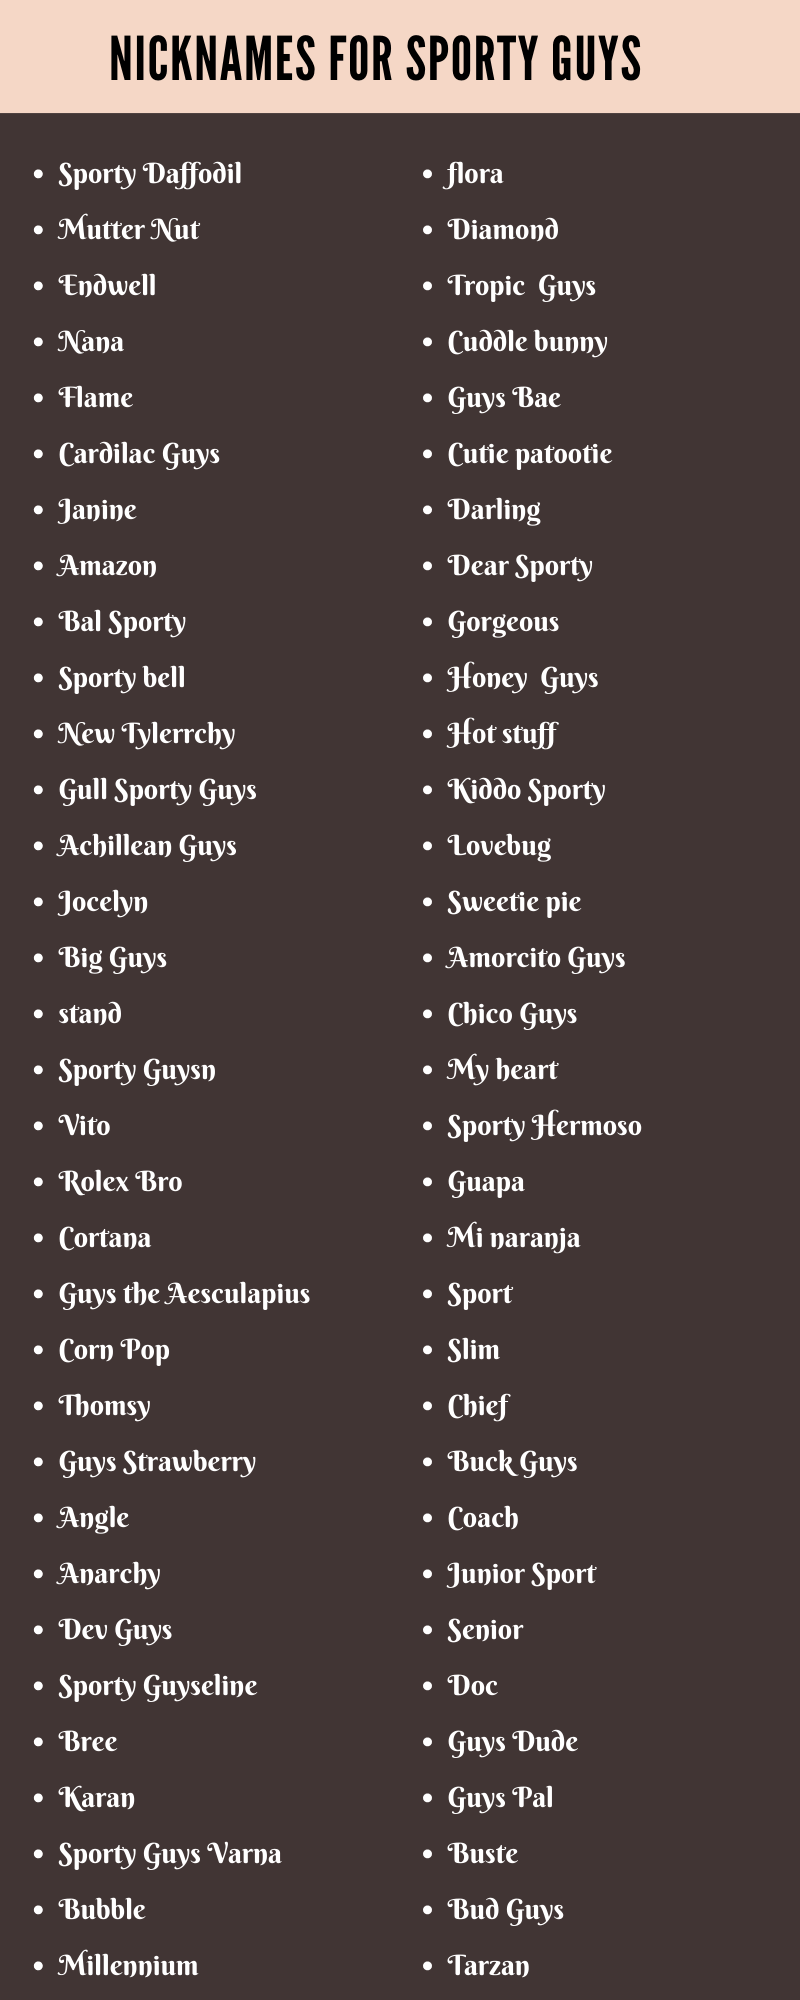 Nicknames For Sporty Guys